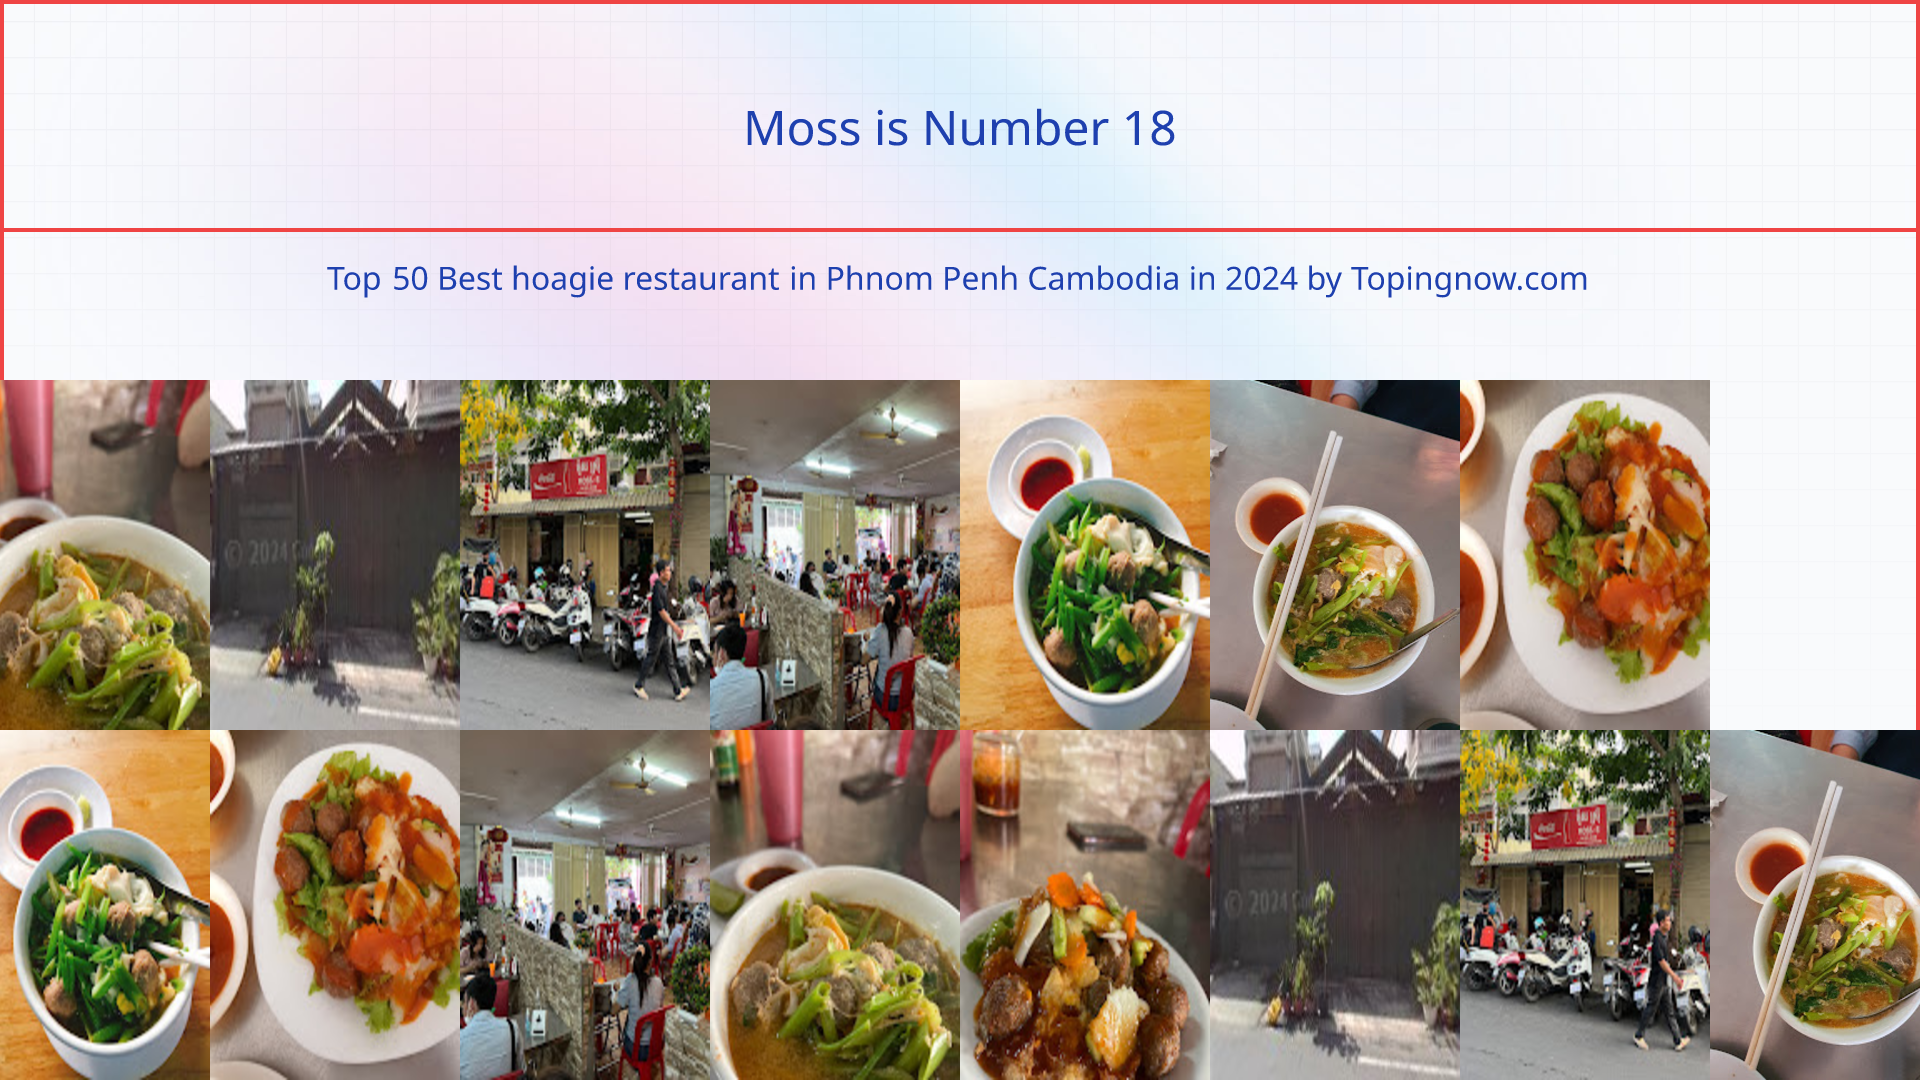 Moss: Top 50 Best hoagie restaurant in Phnom Penh Cambodia in 2024